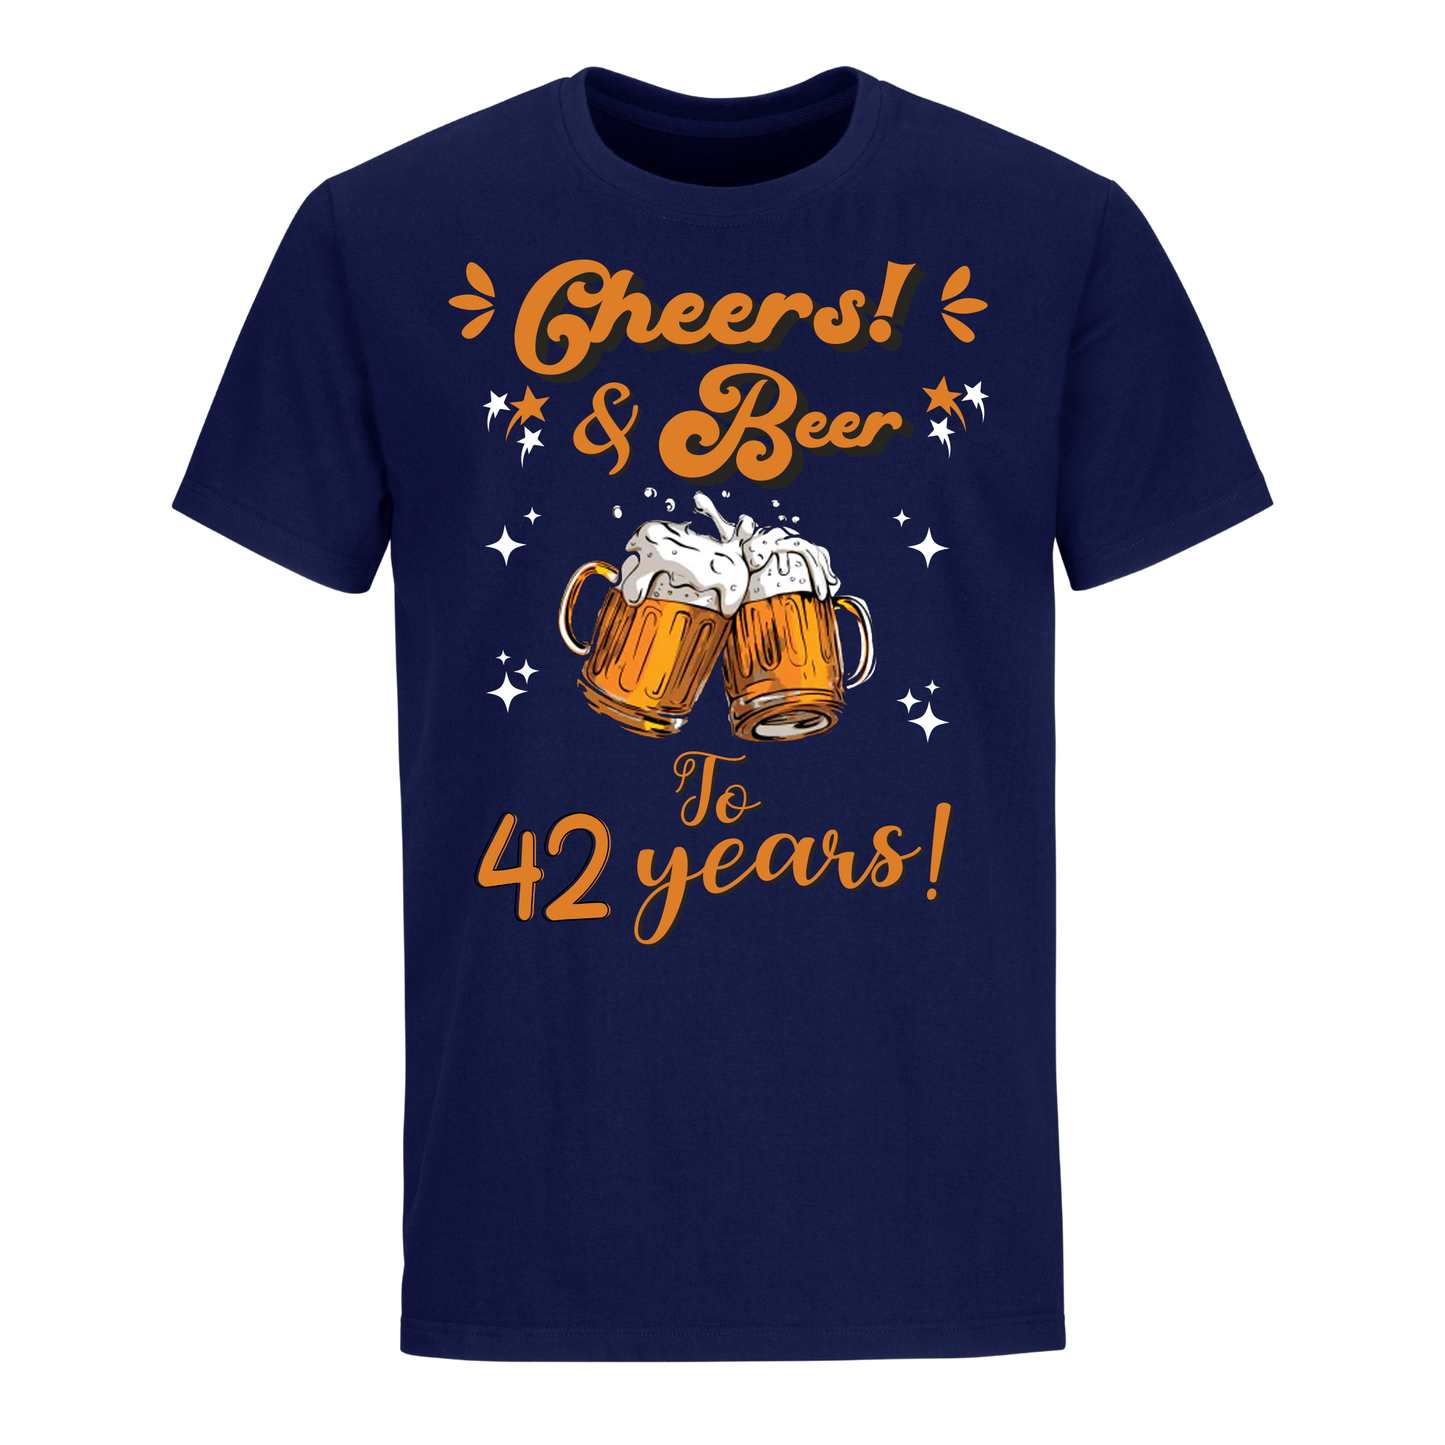 CHEERS & BEER 42 YEARS SHIRT